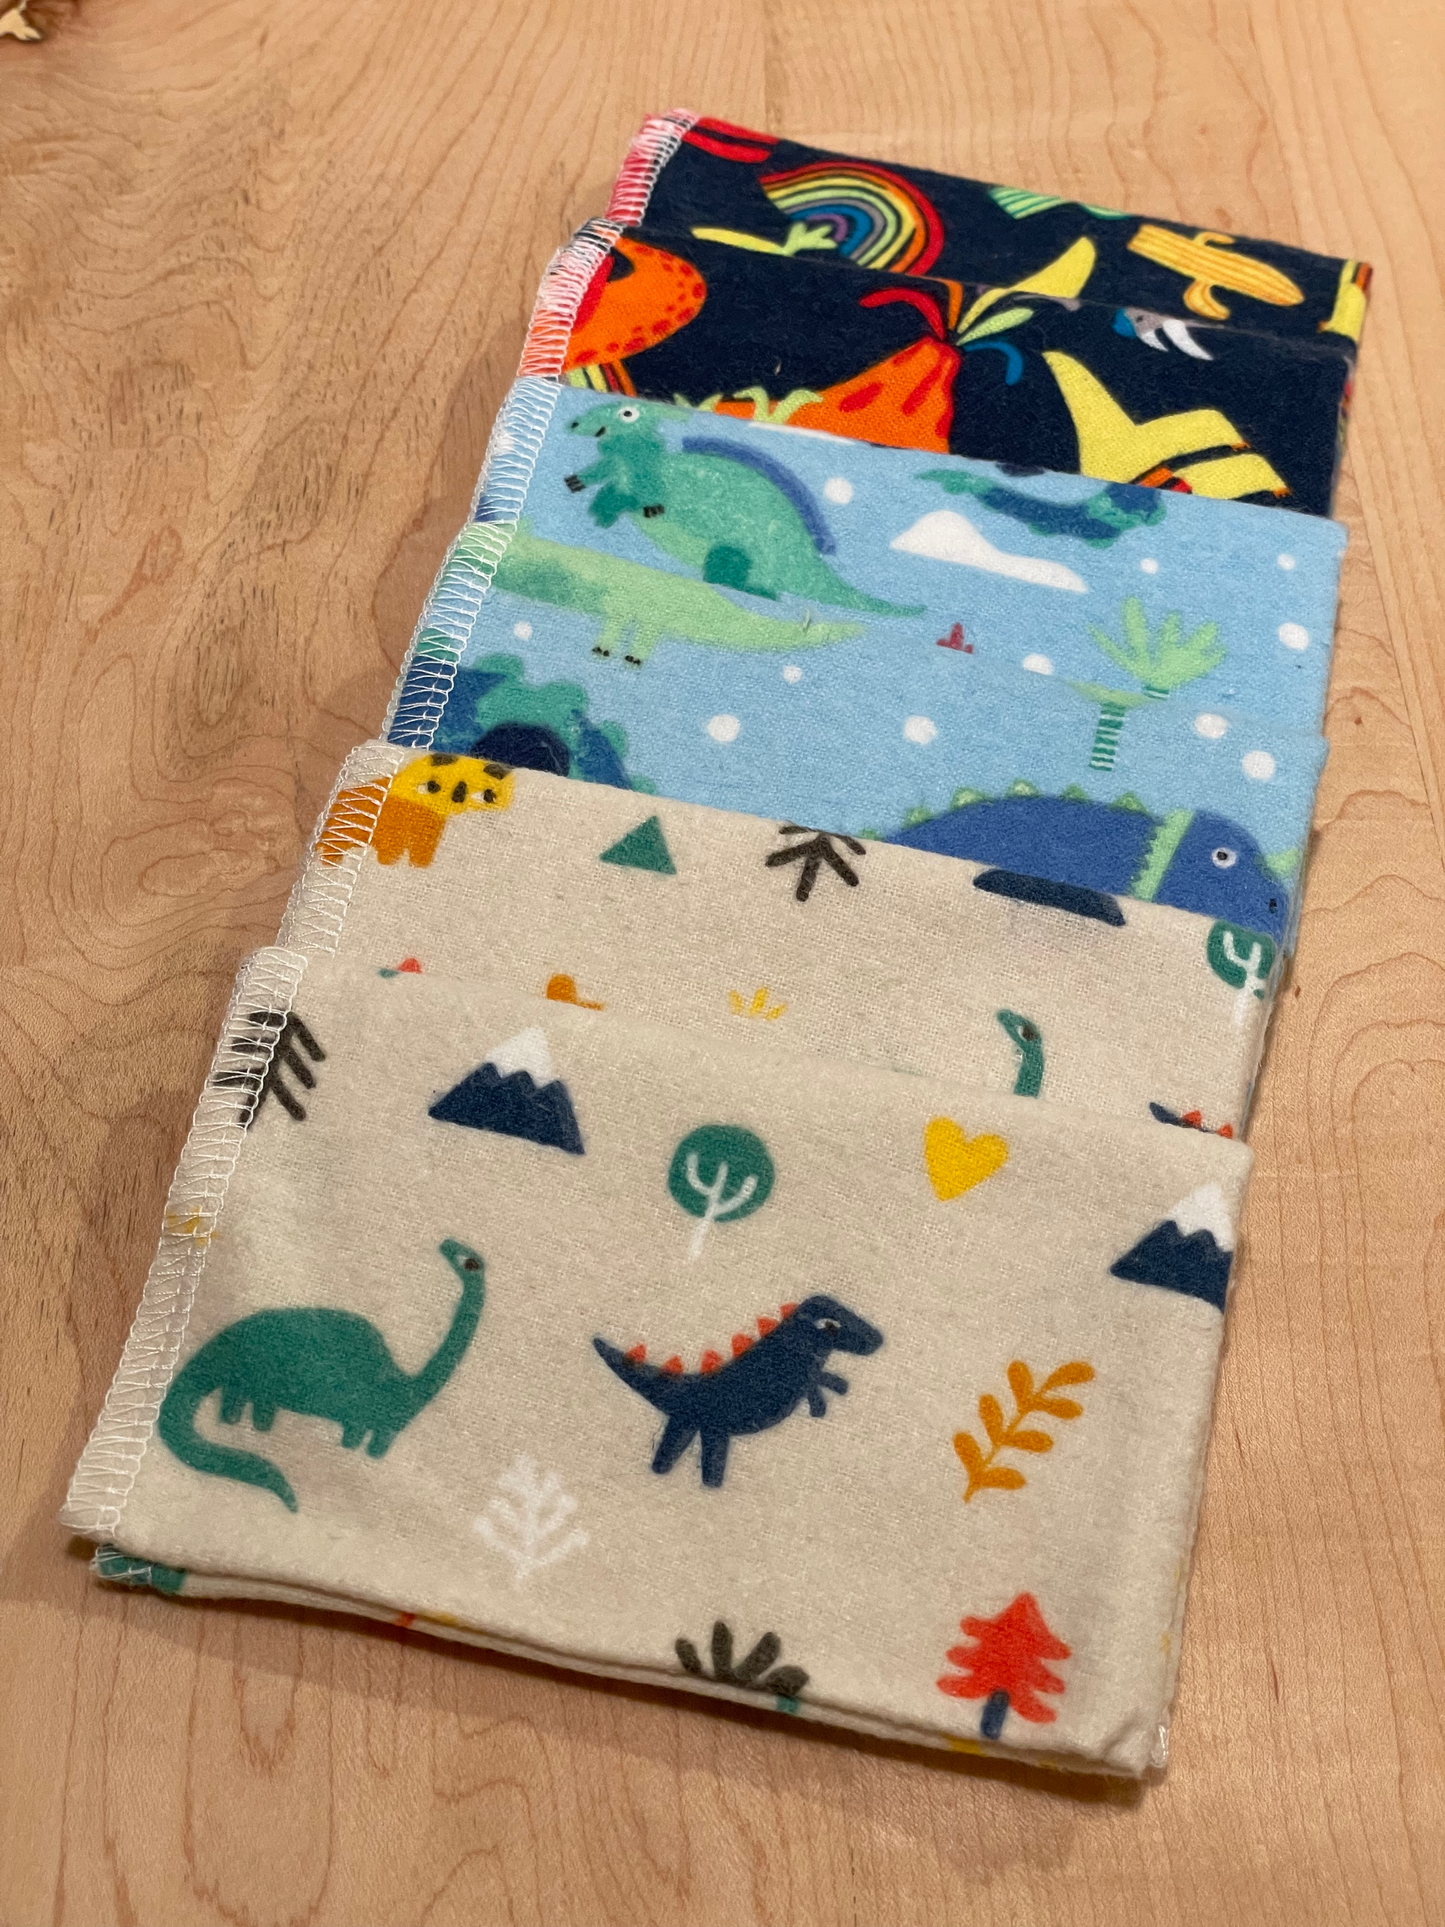 Friendlier Paperless Towels - Dino Mix